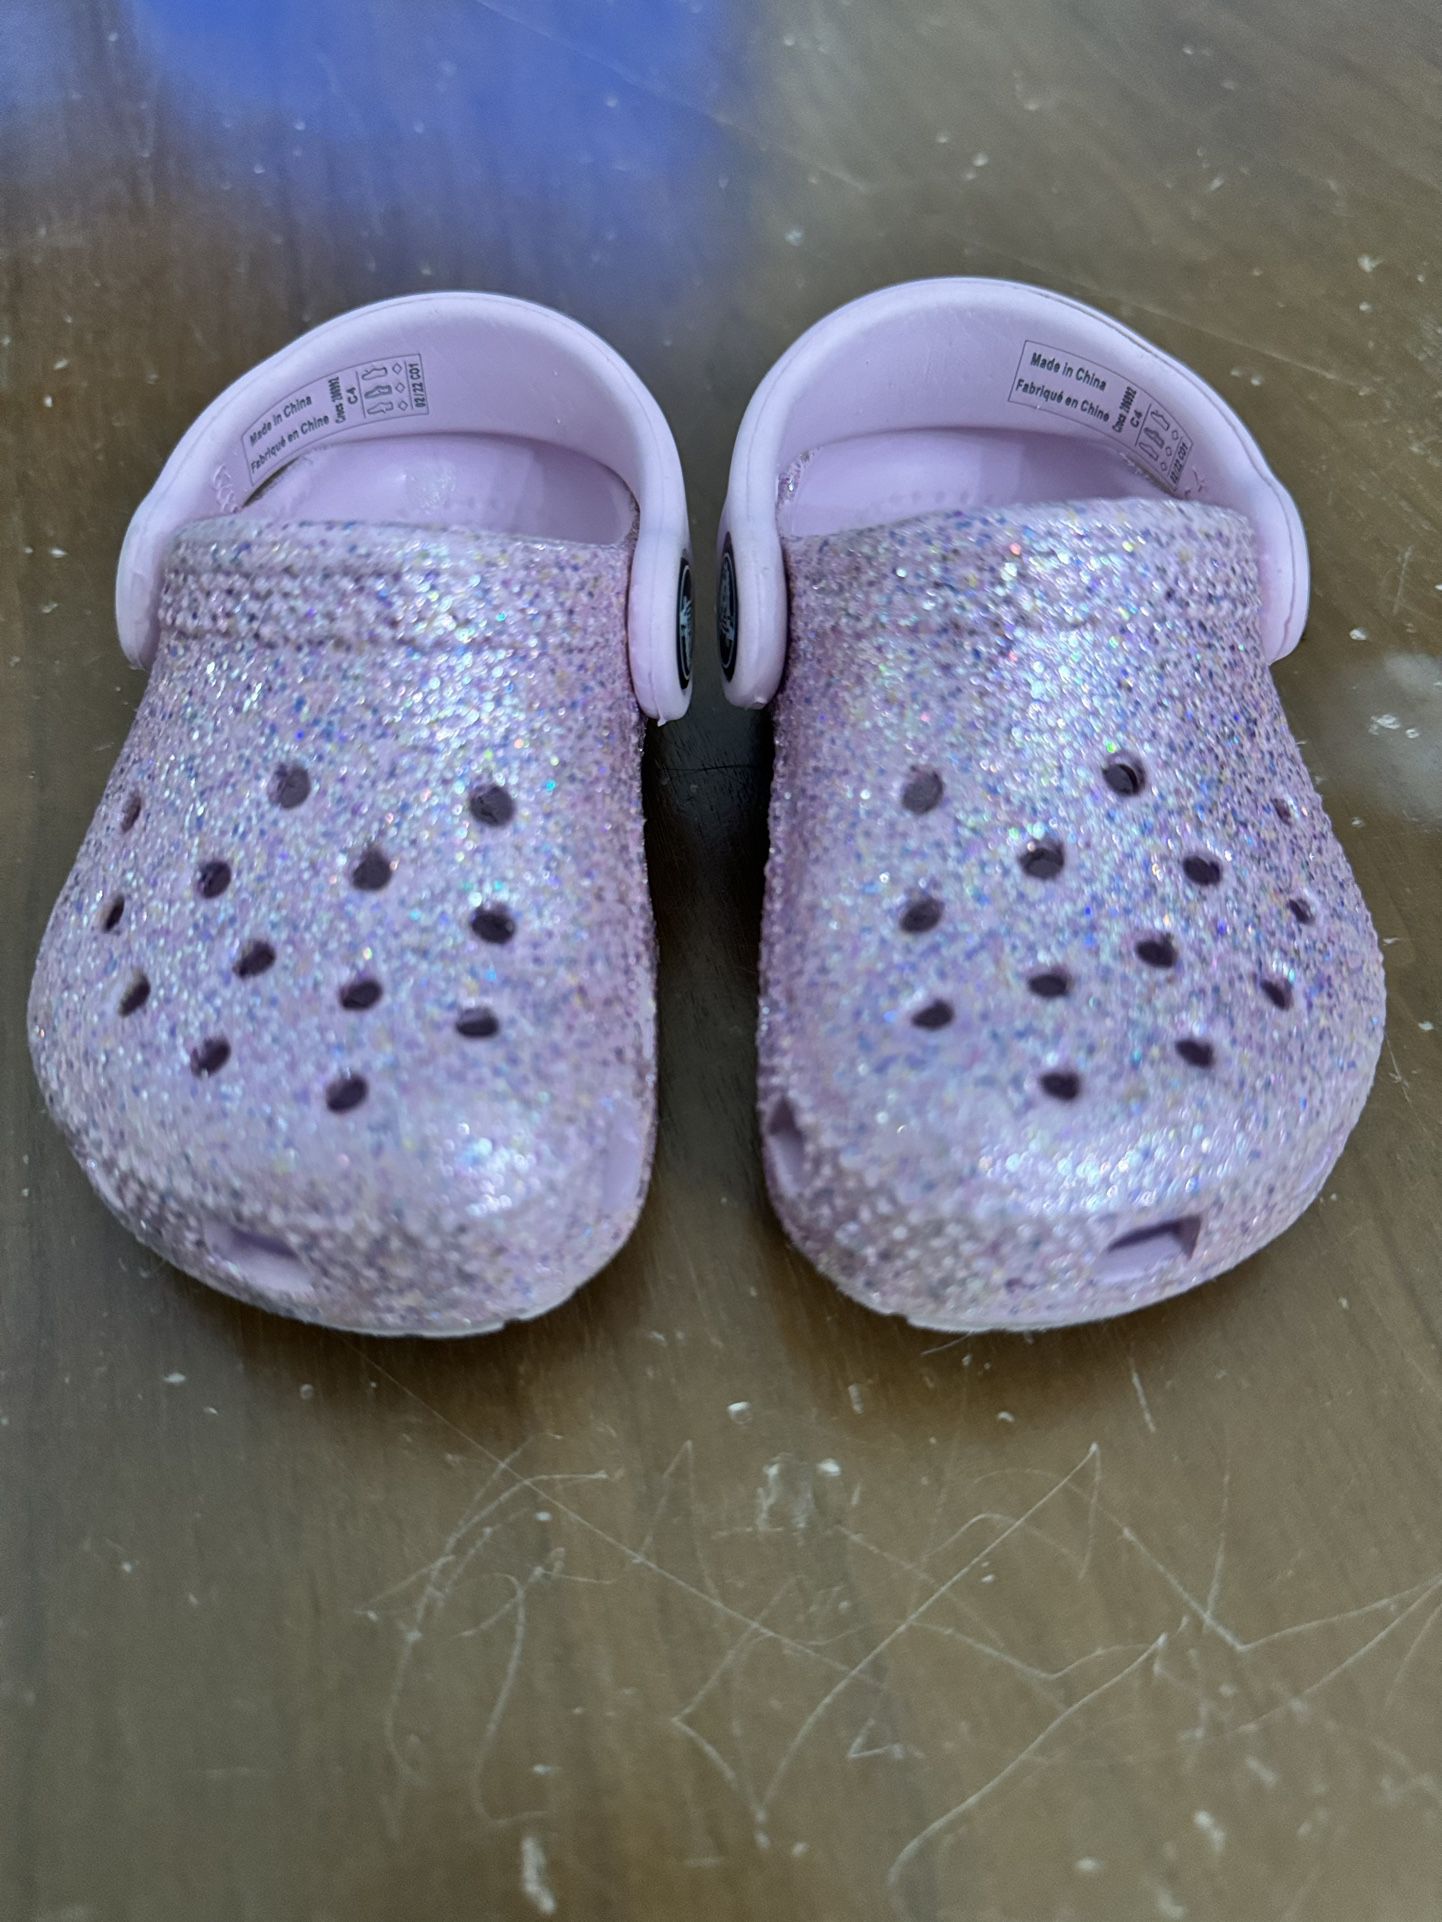 Crocs Pink Glitter Clogs Size C4